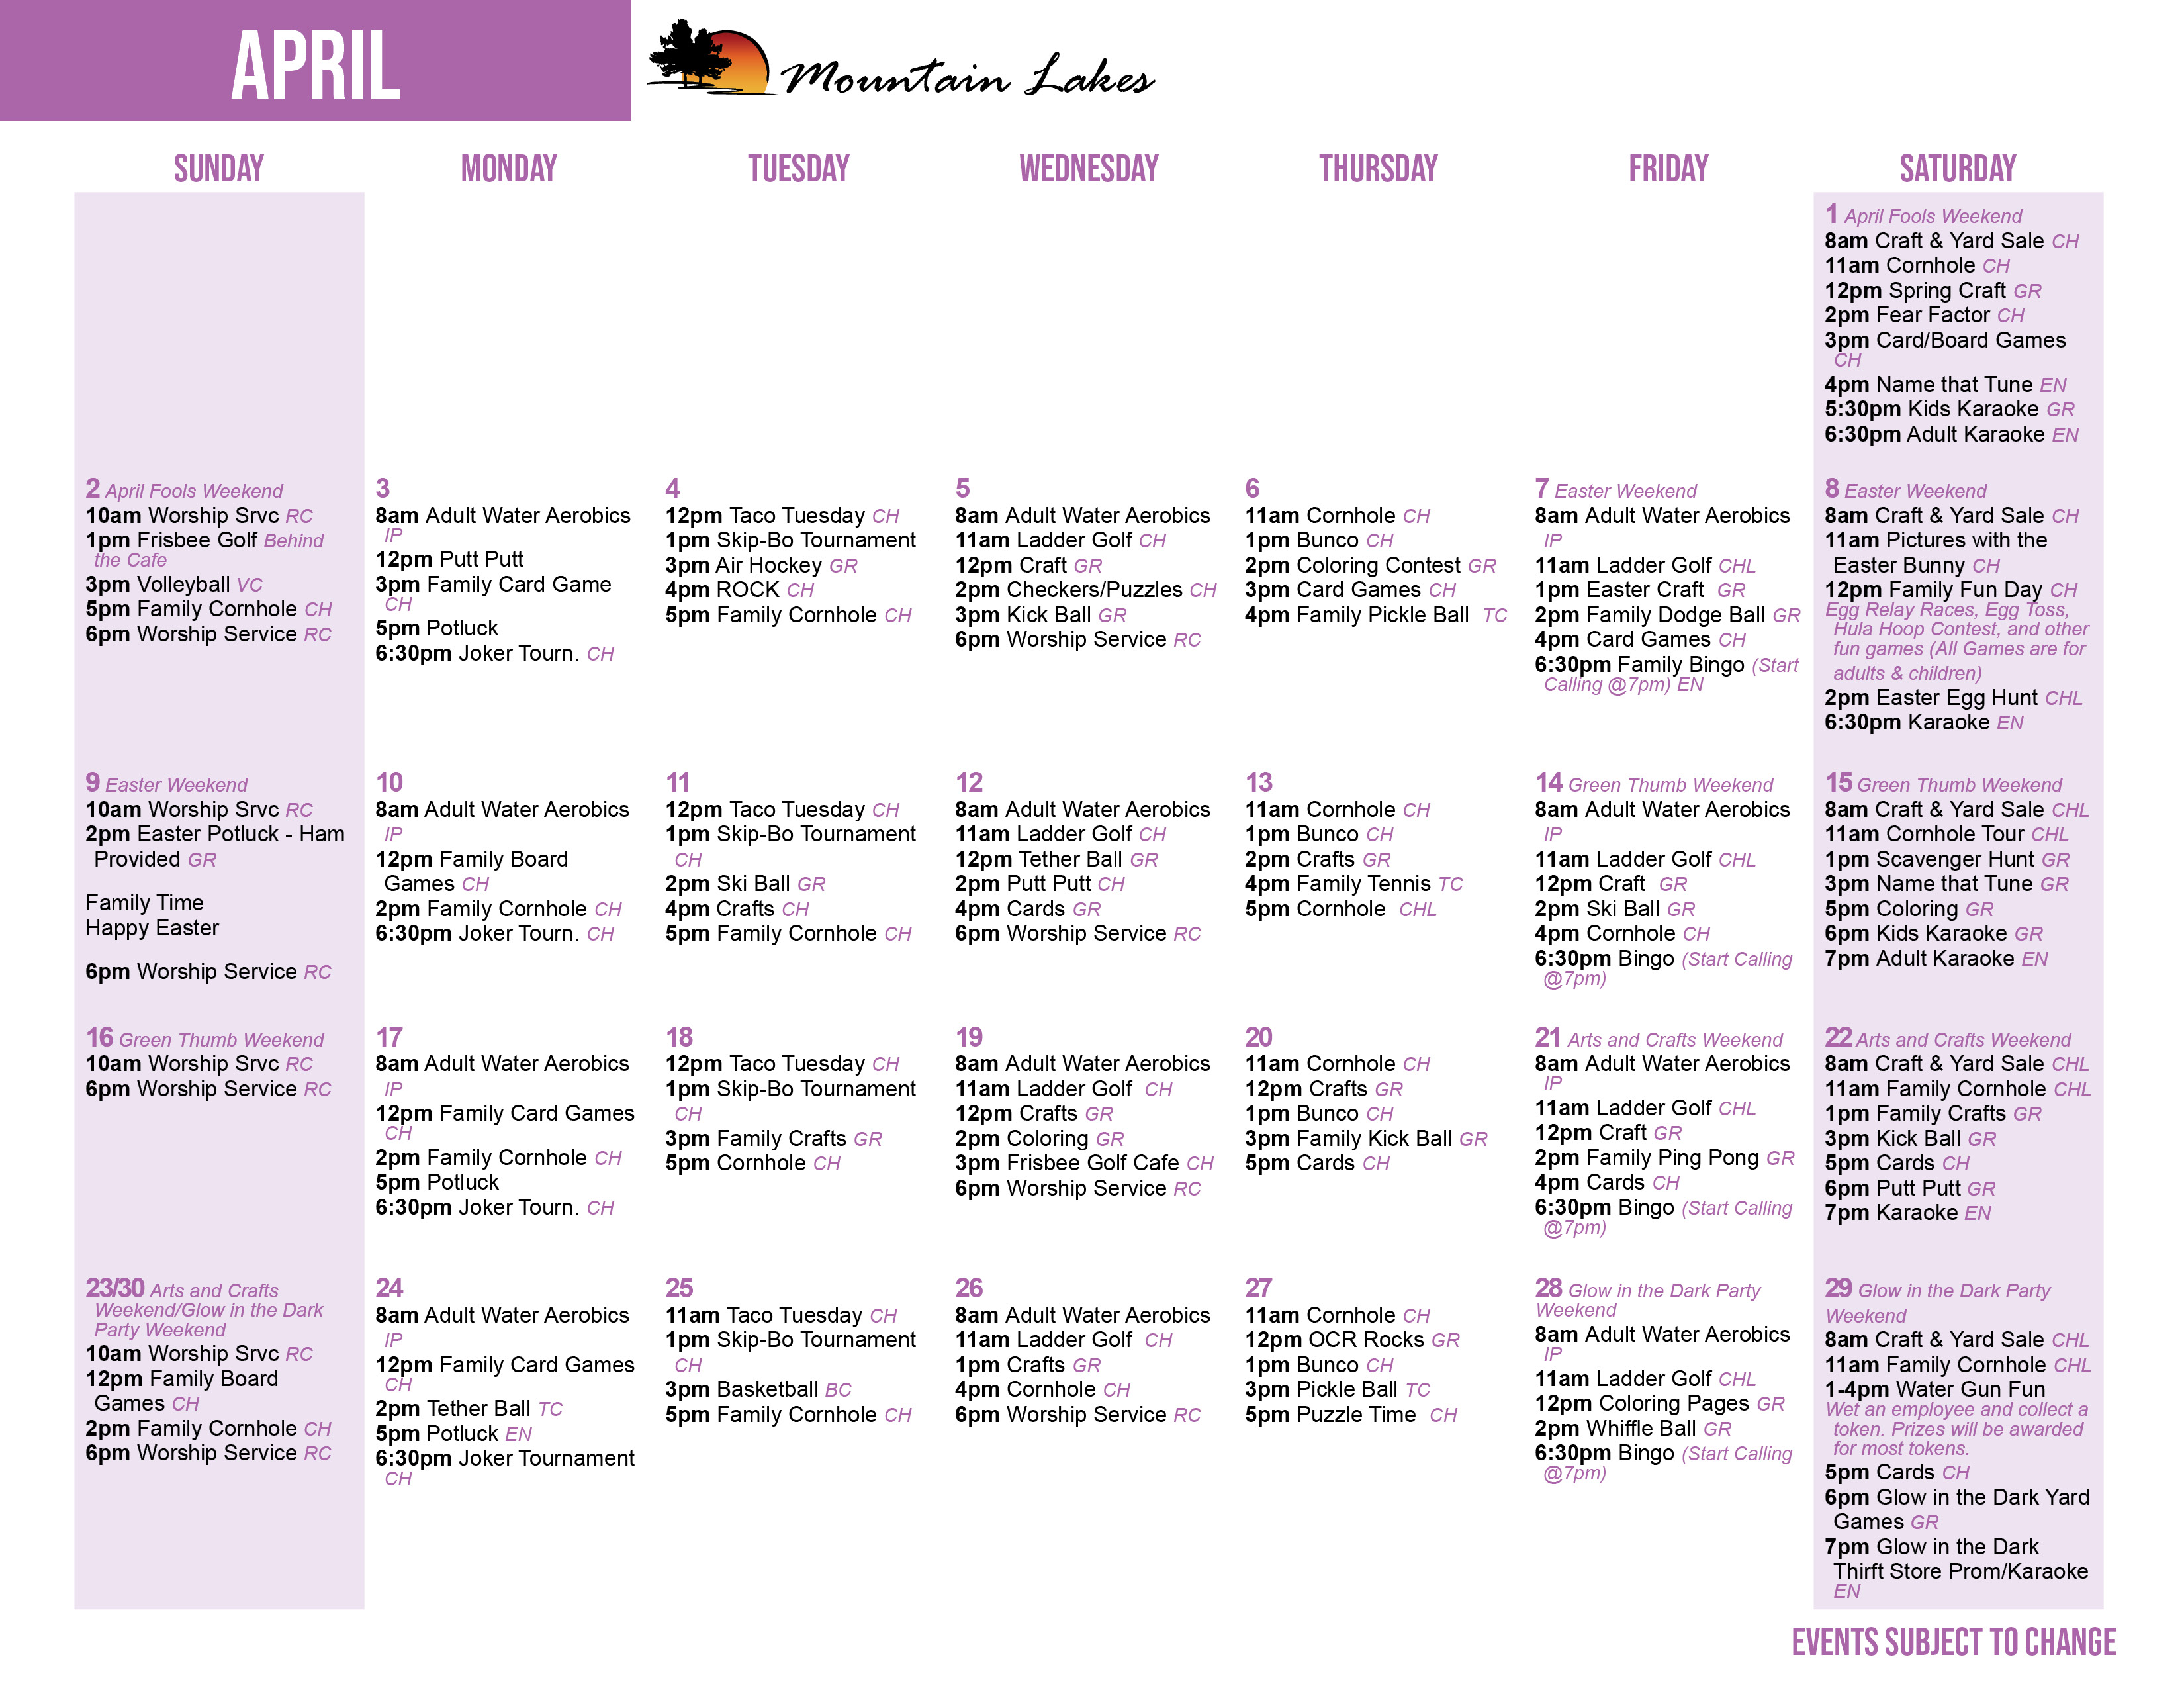 Mountain Lake's April Activity Calendar